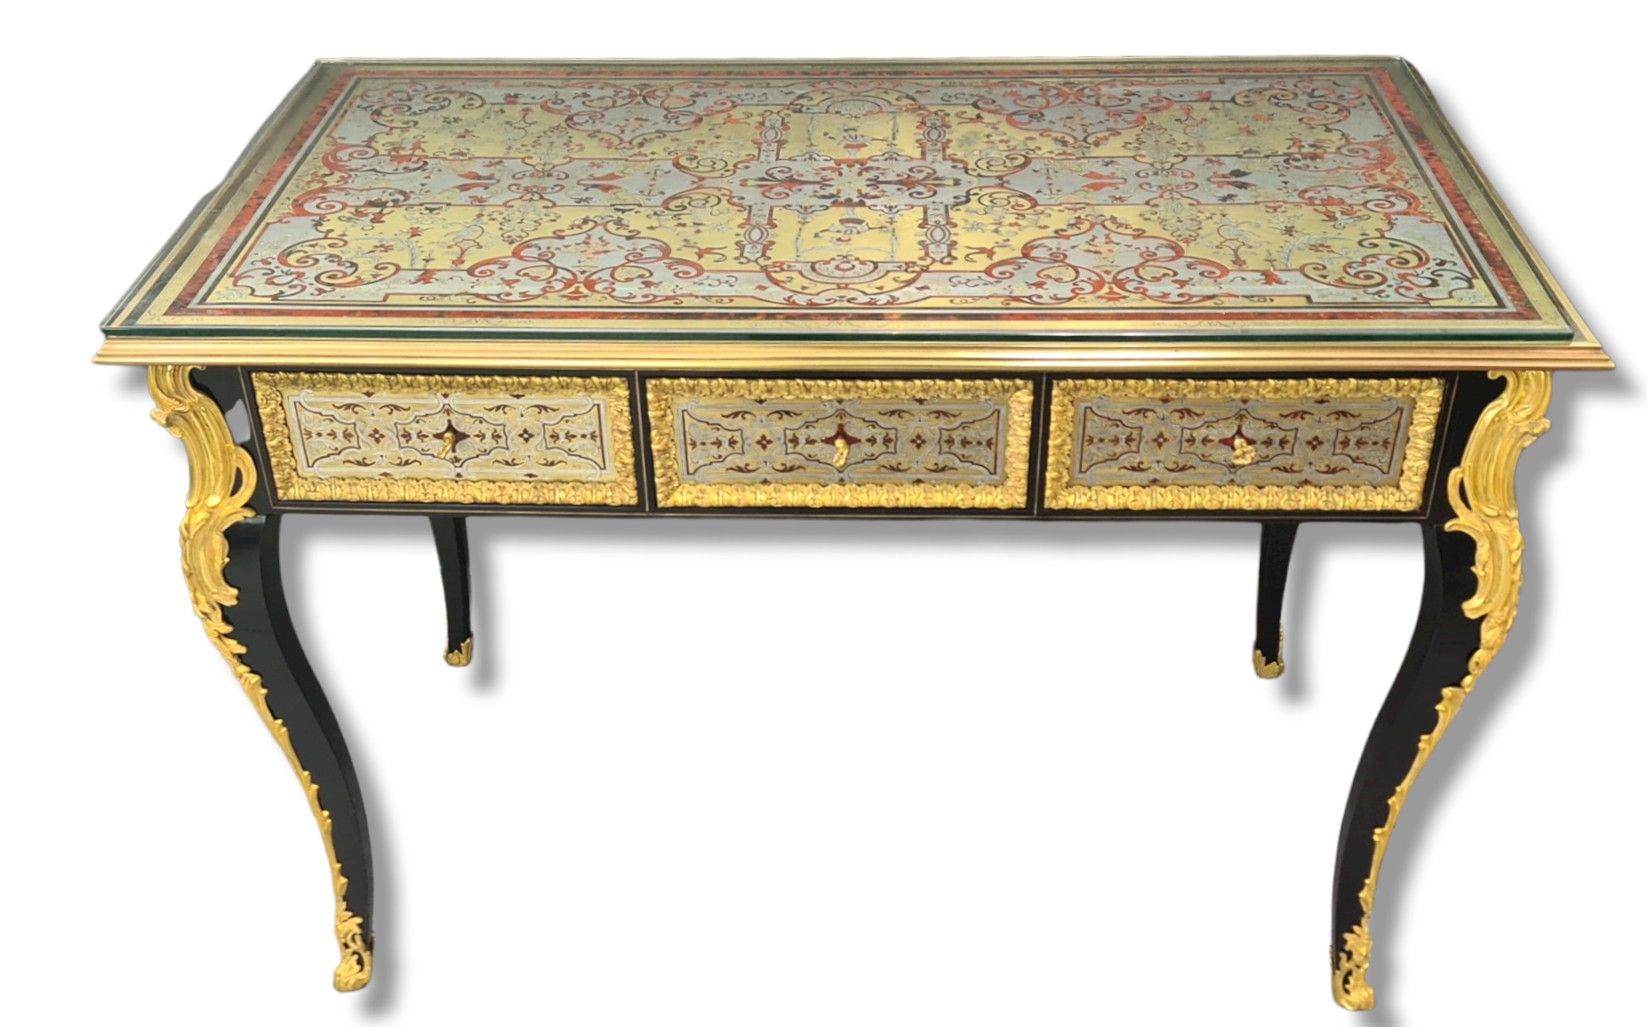 Null 摄政风格的平面书桌，采用Boulle镶嵌工艺，装饰有杂耍者、动物和人物。龟甲上的金银铜交替。拿破仑三世时期。高度：80厘米。架子：122 x 72厘米&hellip;